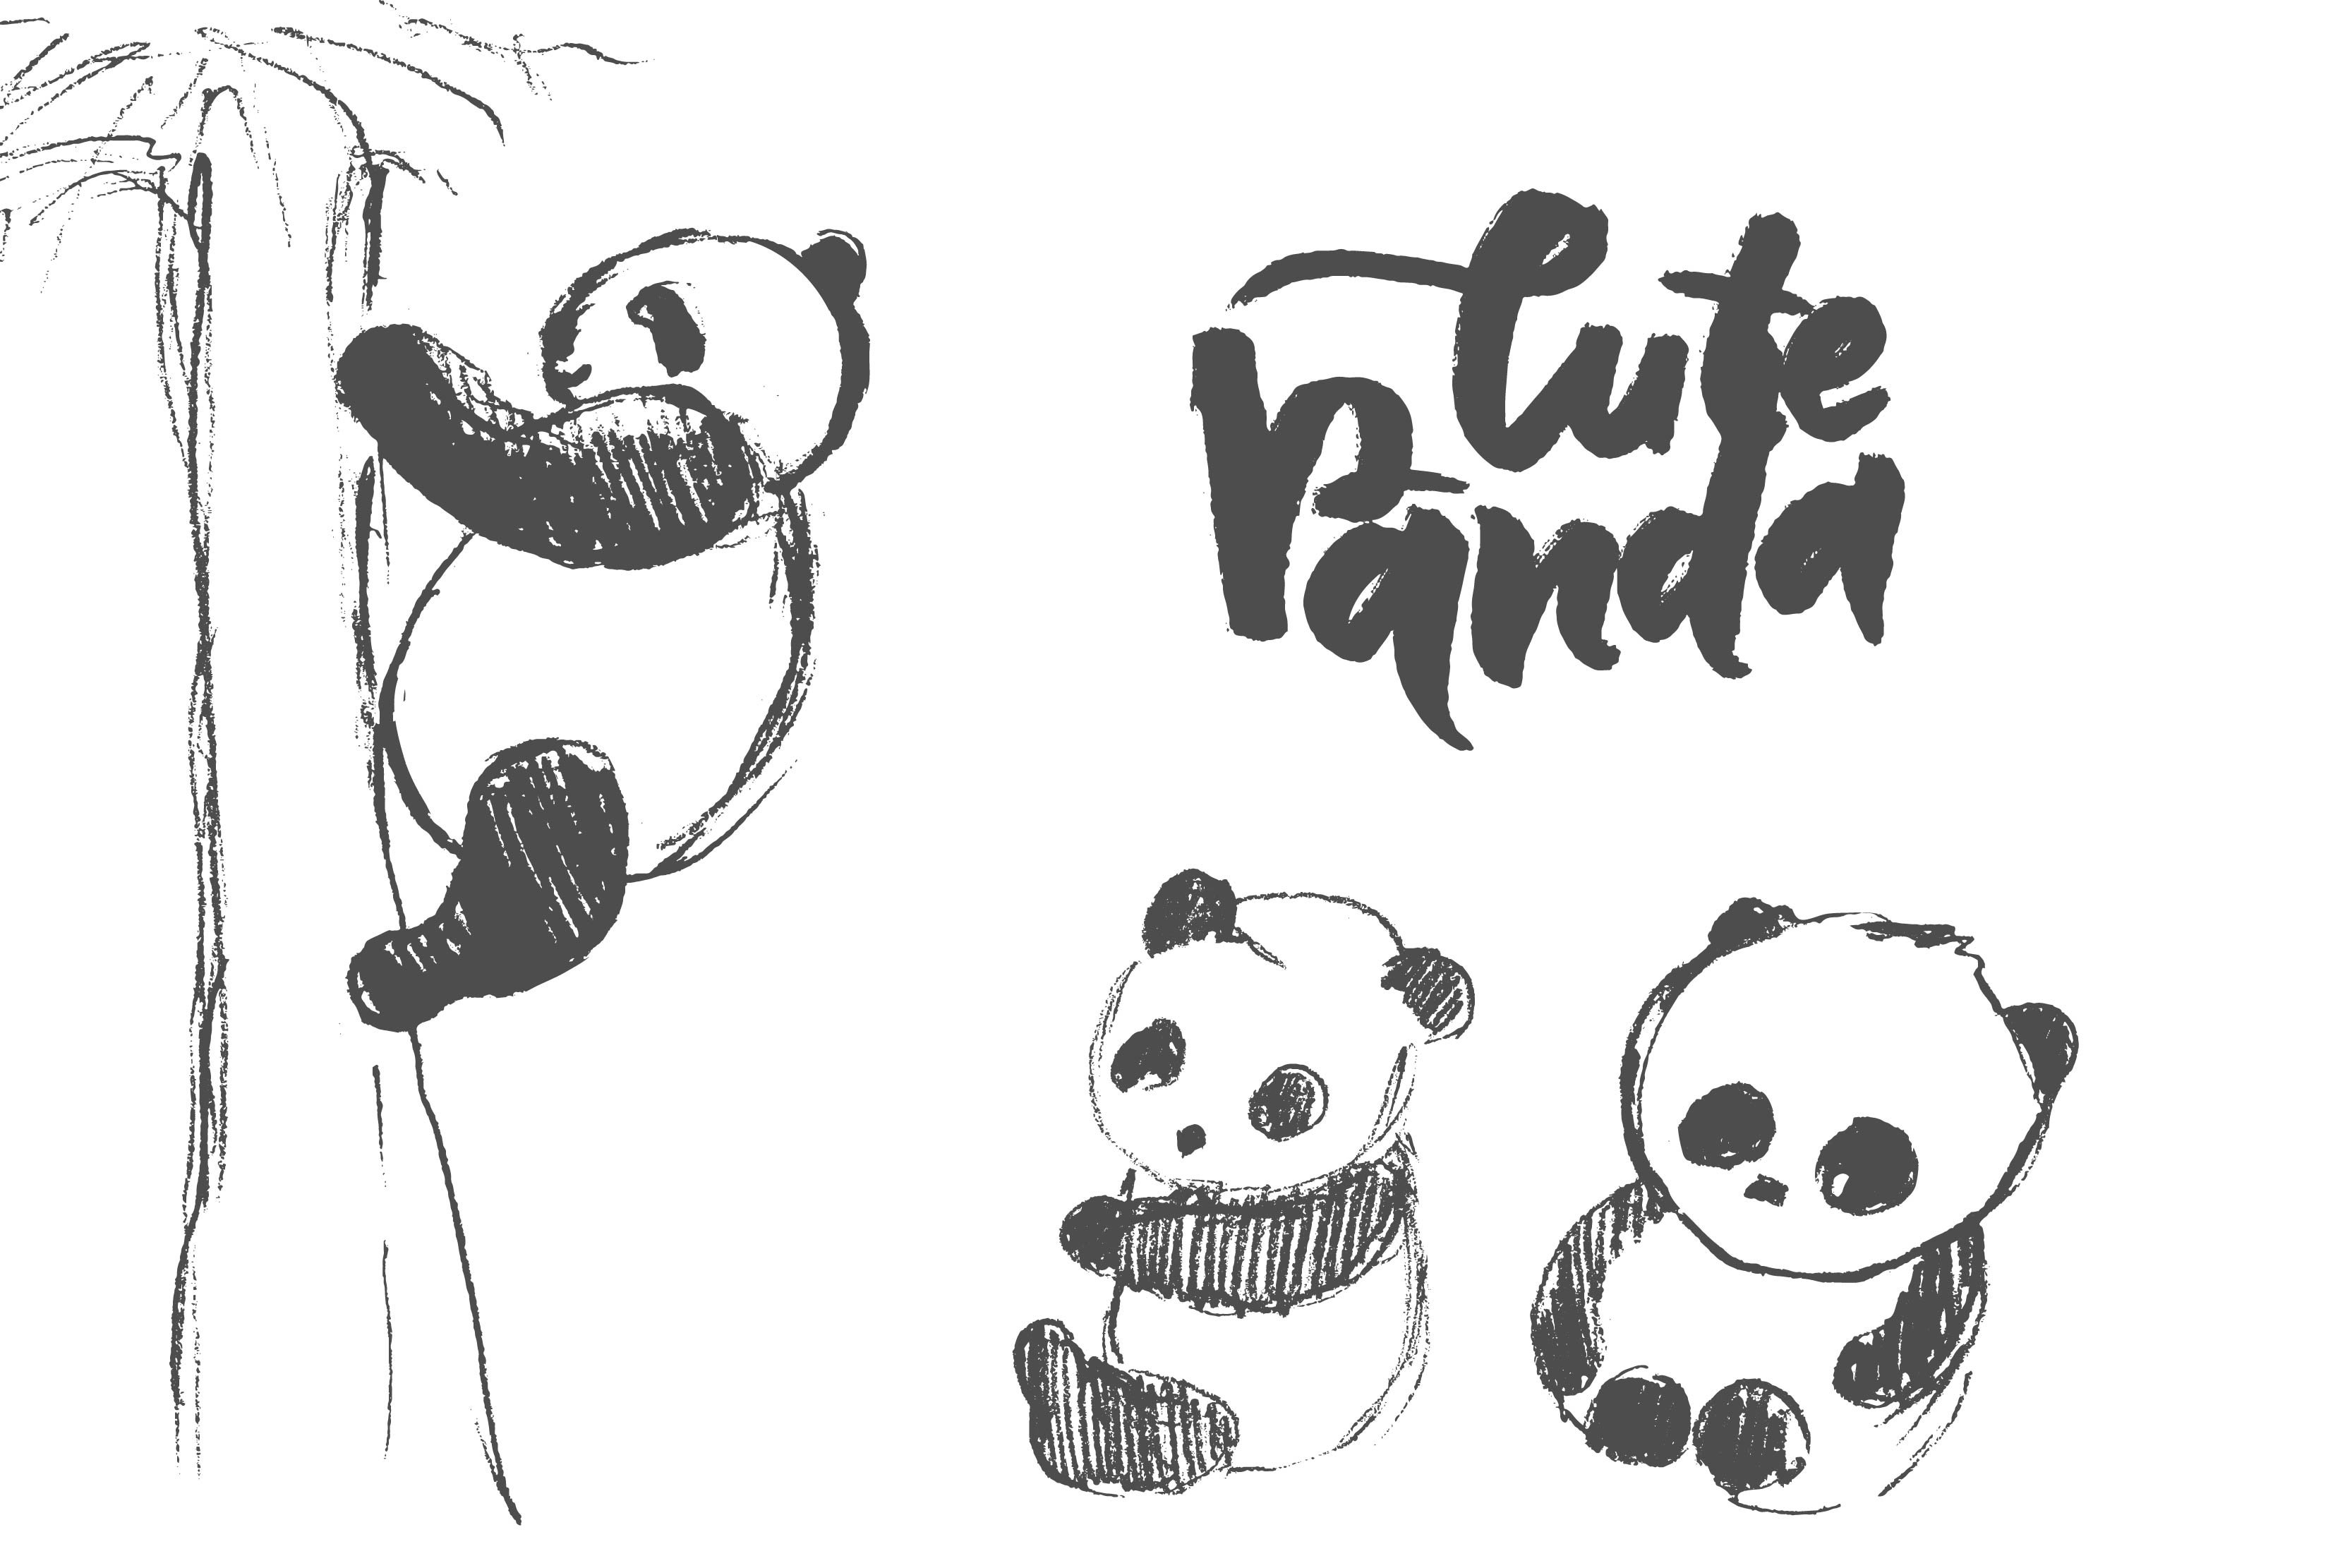 Cute pandas preview image.